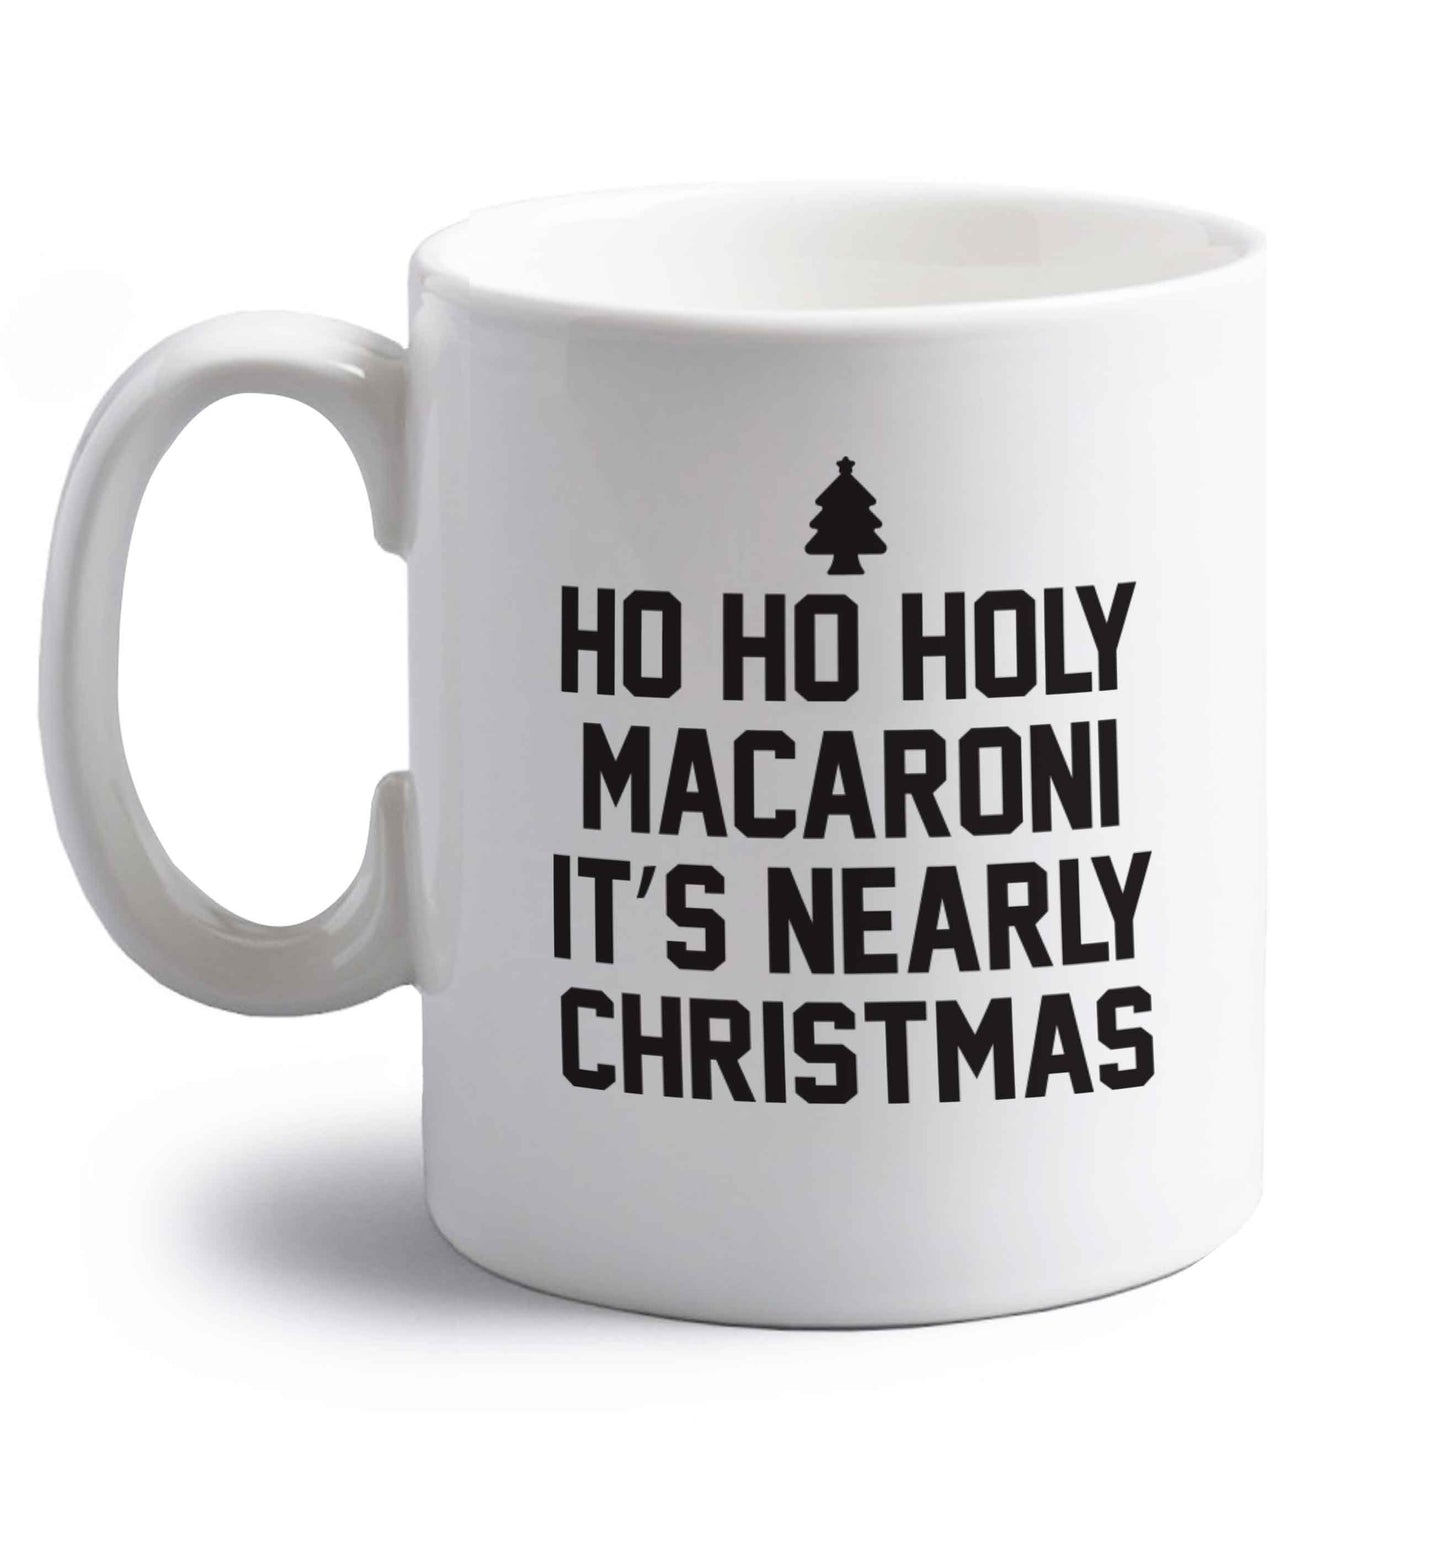 Ho ho holy macaroni it's nearly Christmas right handed white ceramic mug 